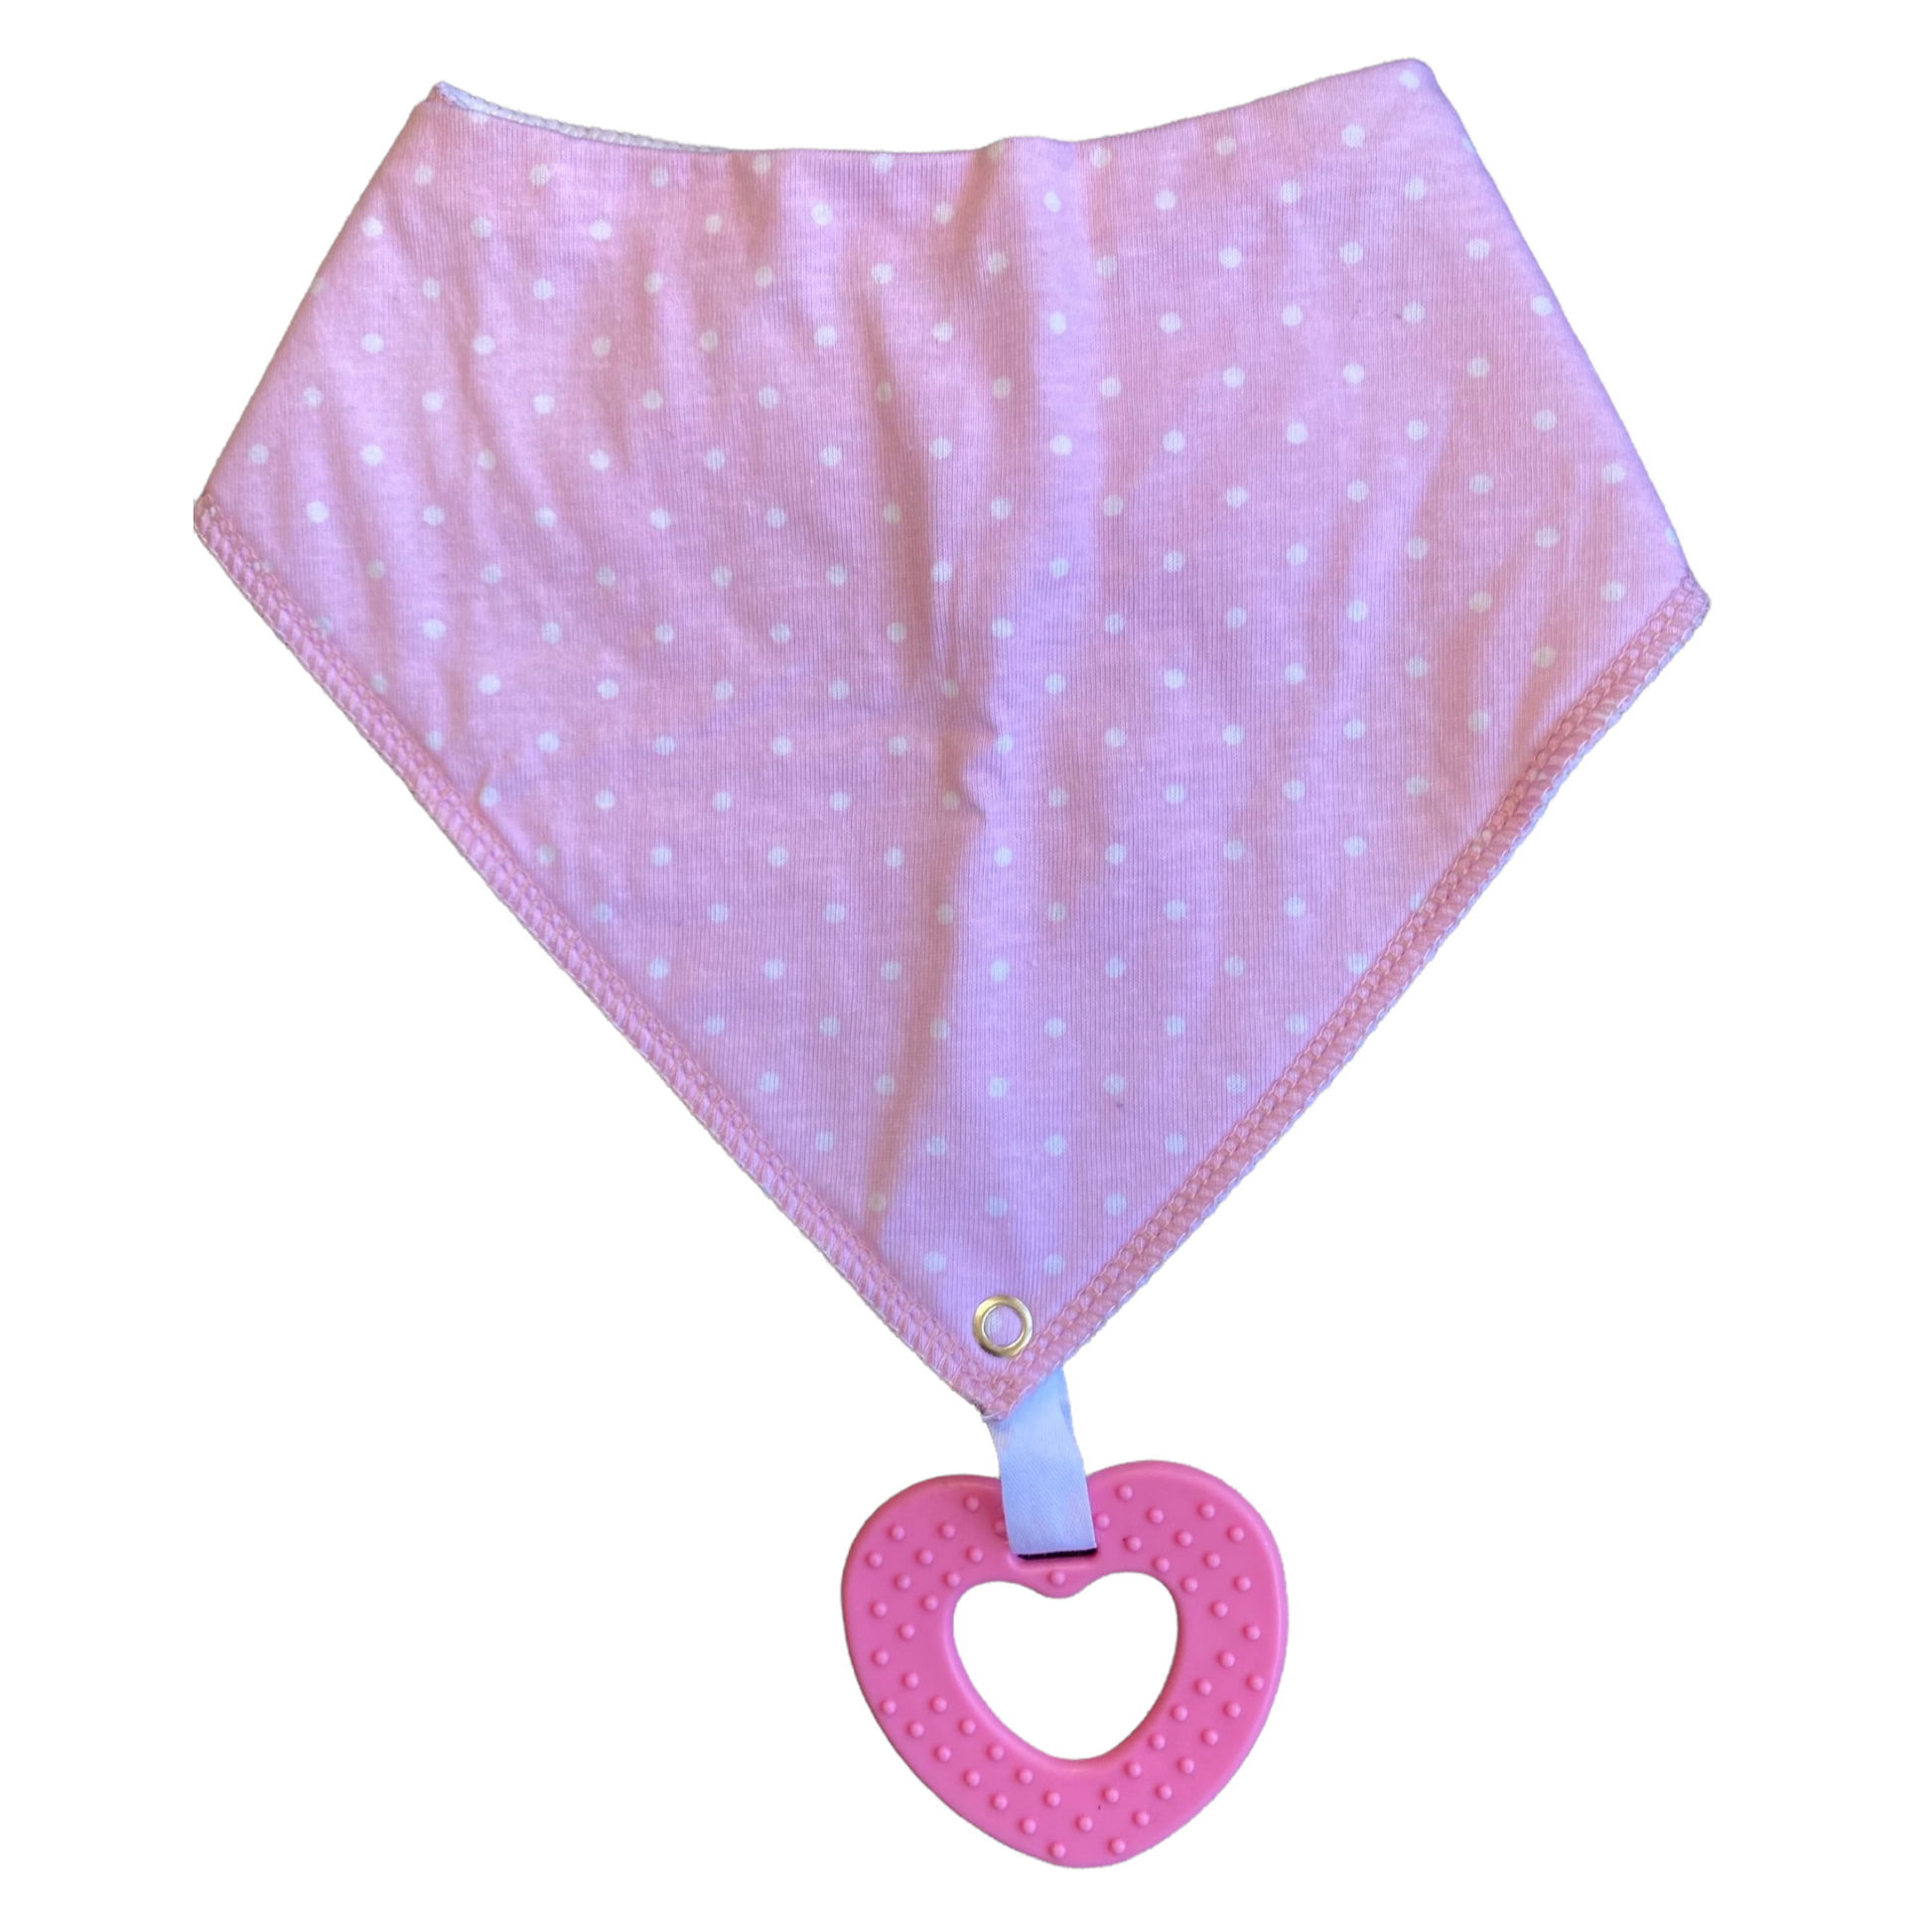 Bib with Detachable Teething Ring (assorted patterns) Bibs SPIRIT SPARKPLUGS Pink Heart  